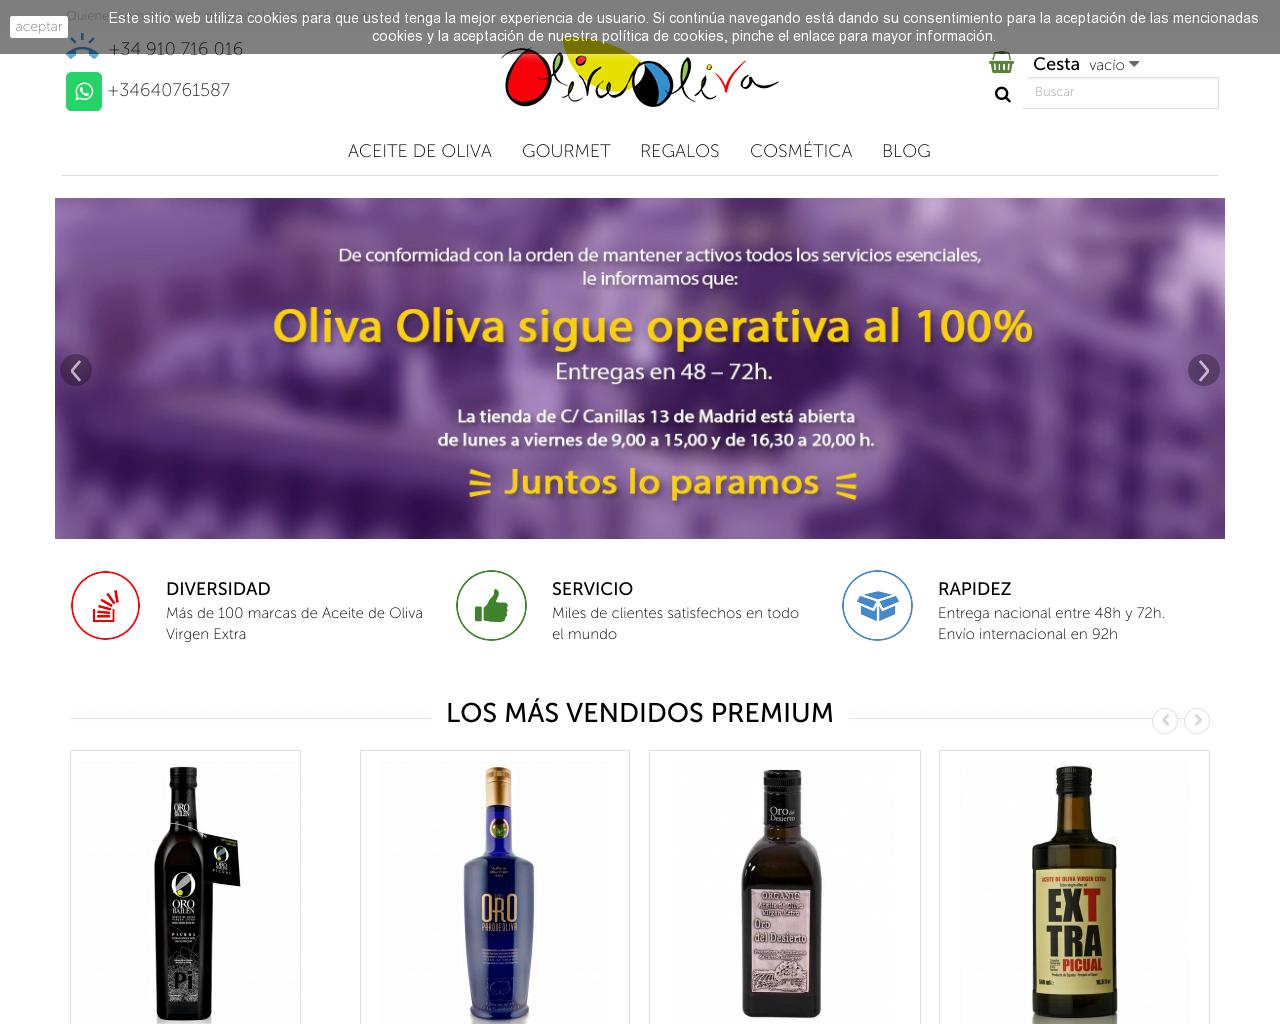 olivaoliva.com